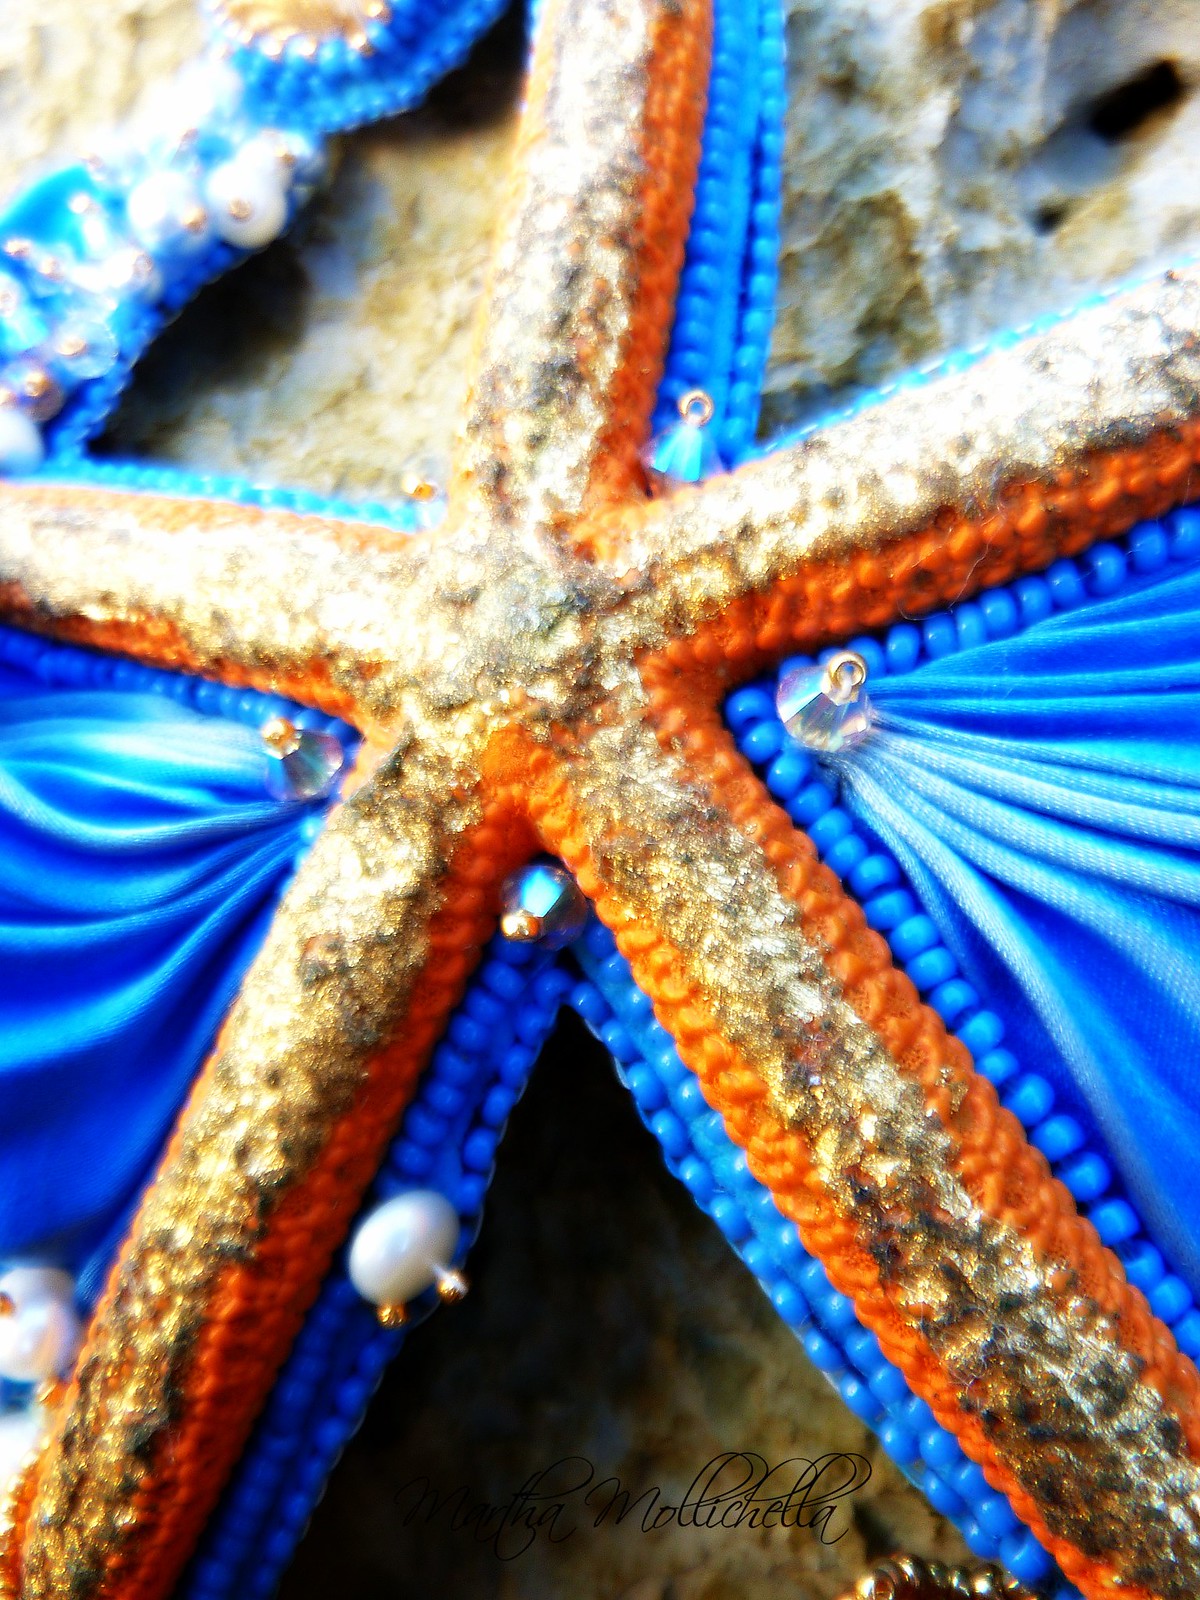 Shibori handmade necklace seashells star fish Swarovski by Martha Mollichella